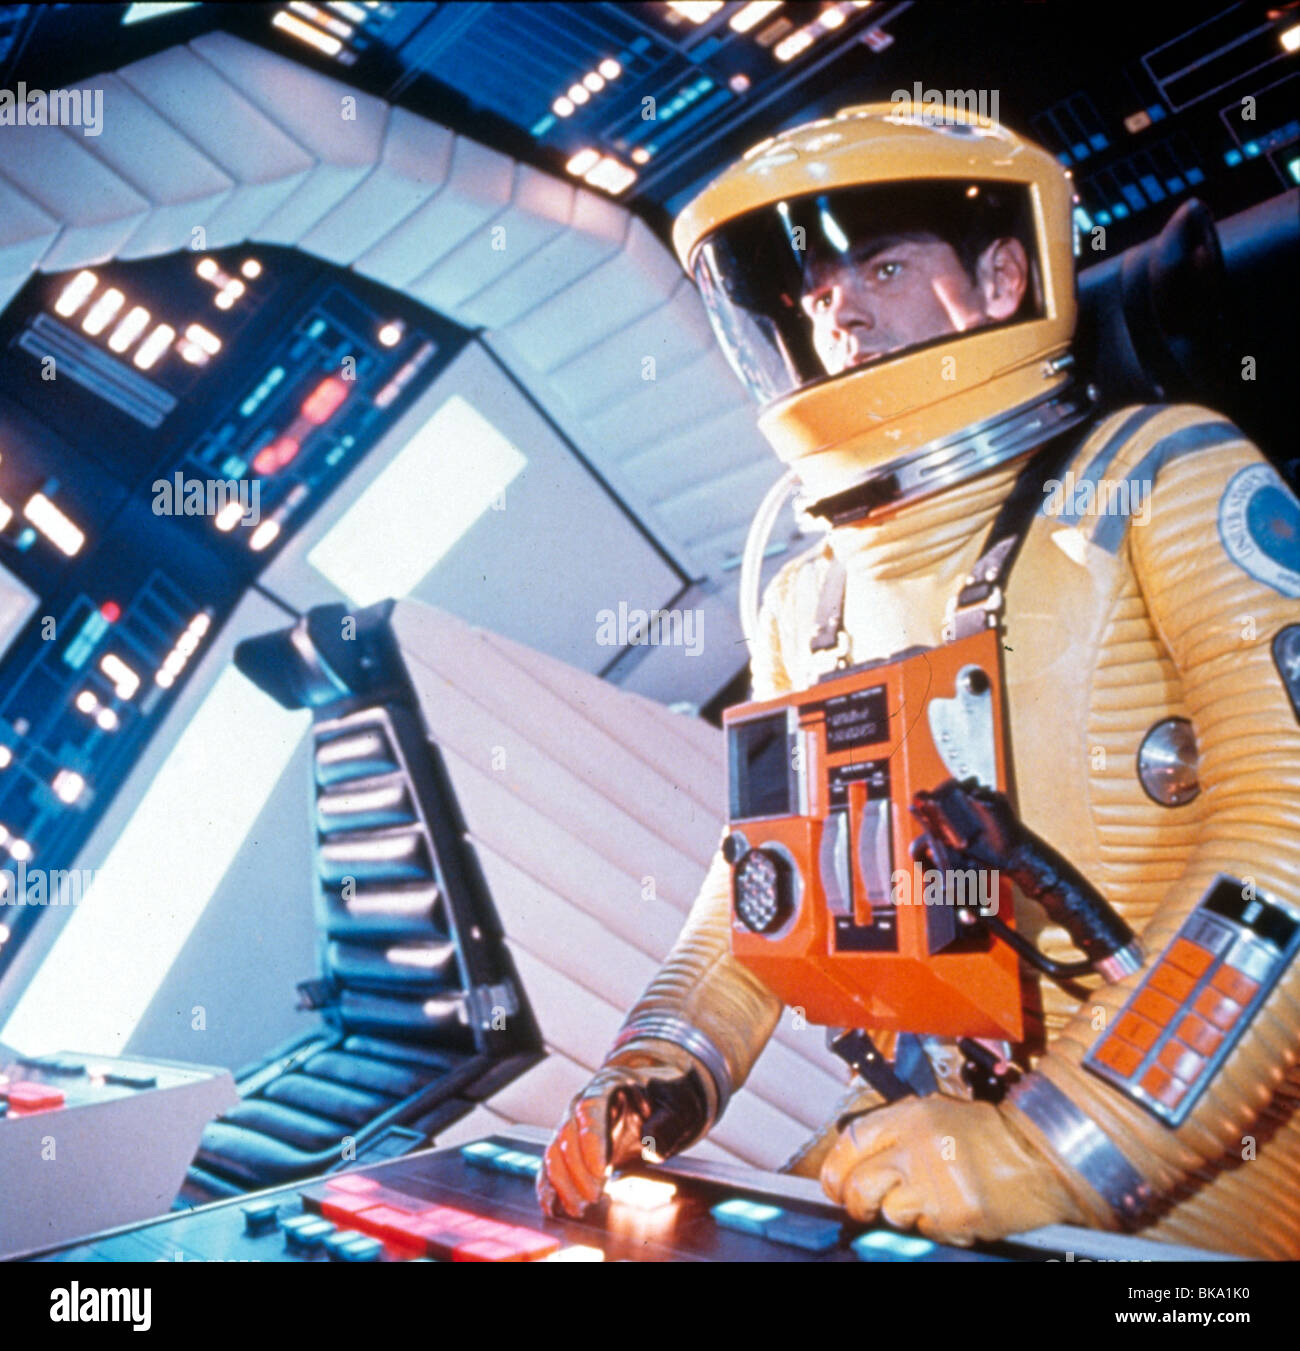 2001: A SPACE ODYSSEY (1968) GARY LOCKWOOD TT0 108 Stock Photo